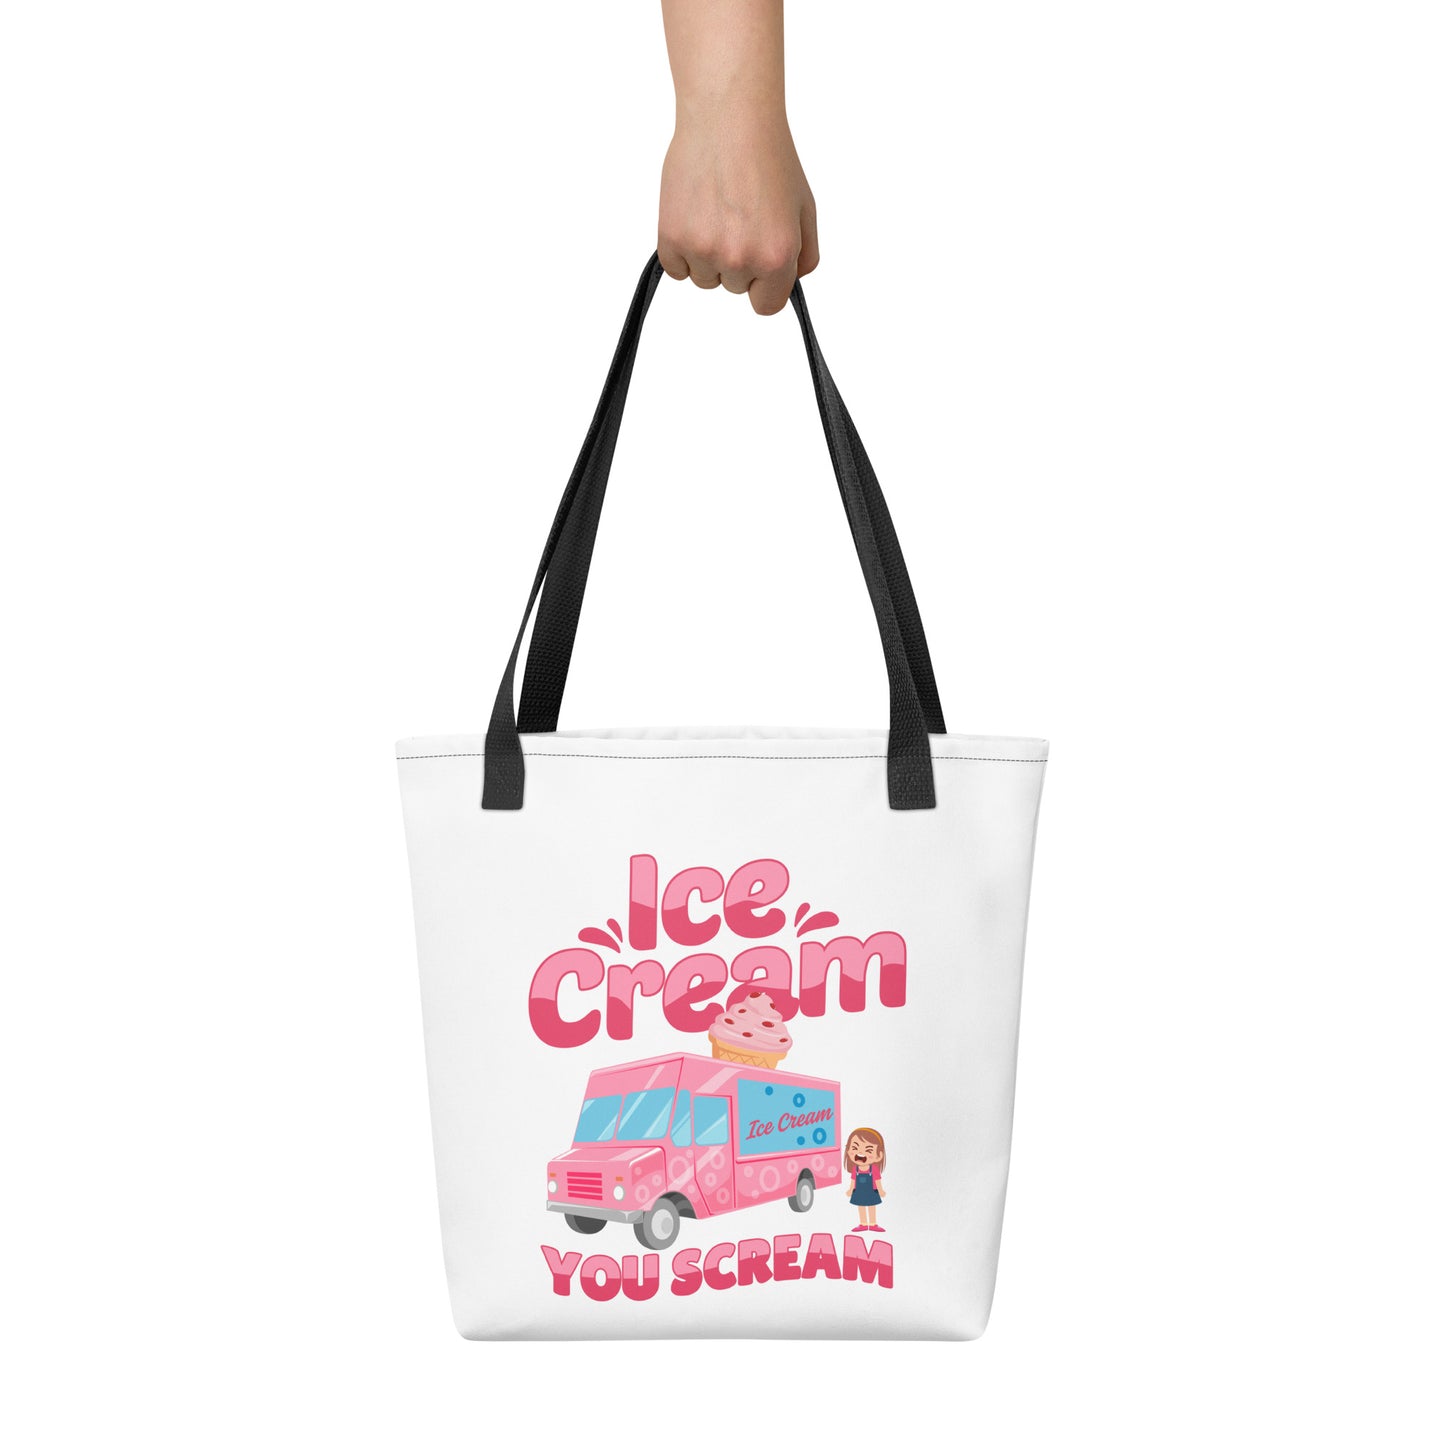 Ice Cream You Scream Tote bag